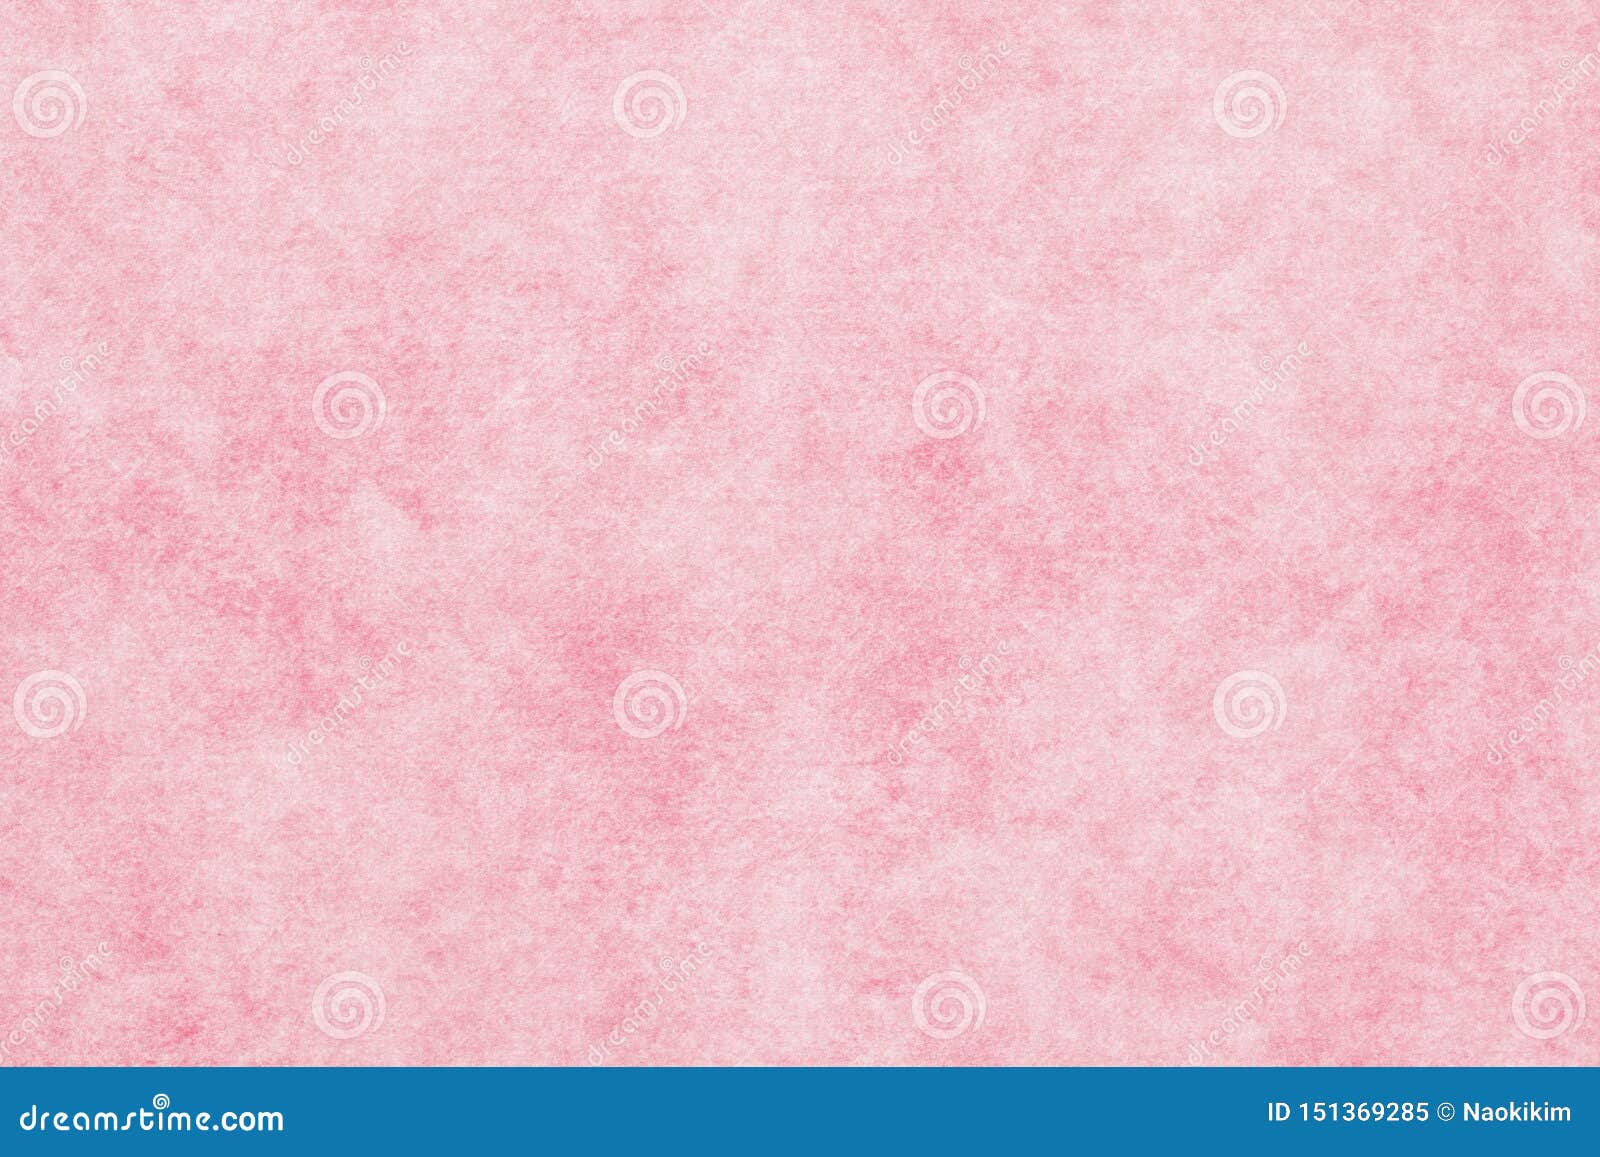 Japanese Vintage Pink Color Paper Texture or Grunge Background Stock ...